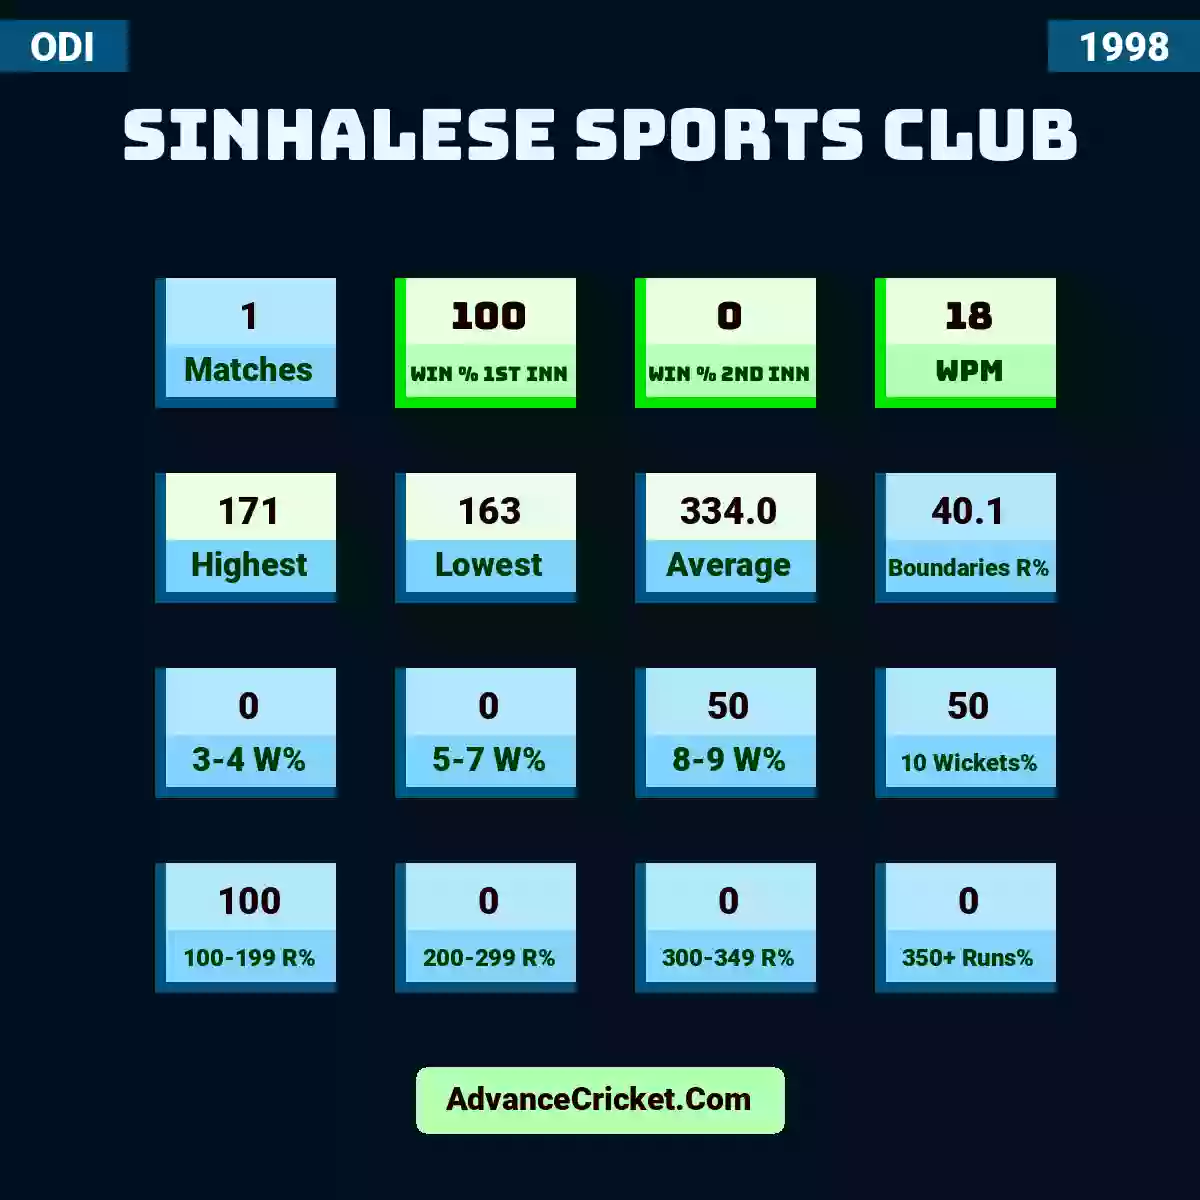 Image showing Sinhalese Sports Club with Matches: 1, Win % 1st Inn: 100, Win % 2nd Inn: 0, WPM: 18, Highest: 171, Lowest: 163, Average: 334.0, Boundaries R%: 40.1, 3-4 W%: 0, 5-7 W%: 0, 8-9 W%: 50, 10 Wickets%: 50, 100-199 R%: 100, 200-299 R%: 0, 300-349 R%: 0, 350+ Runs%: 0.